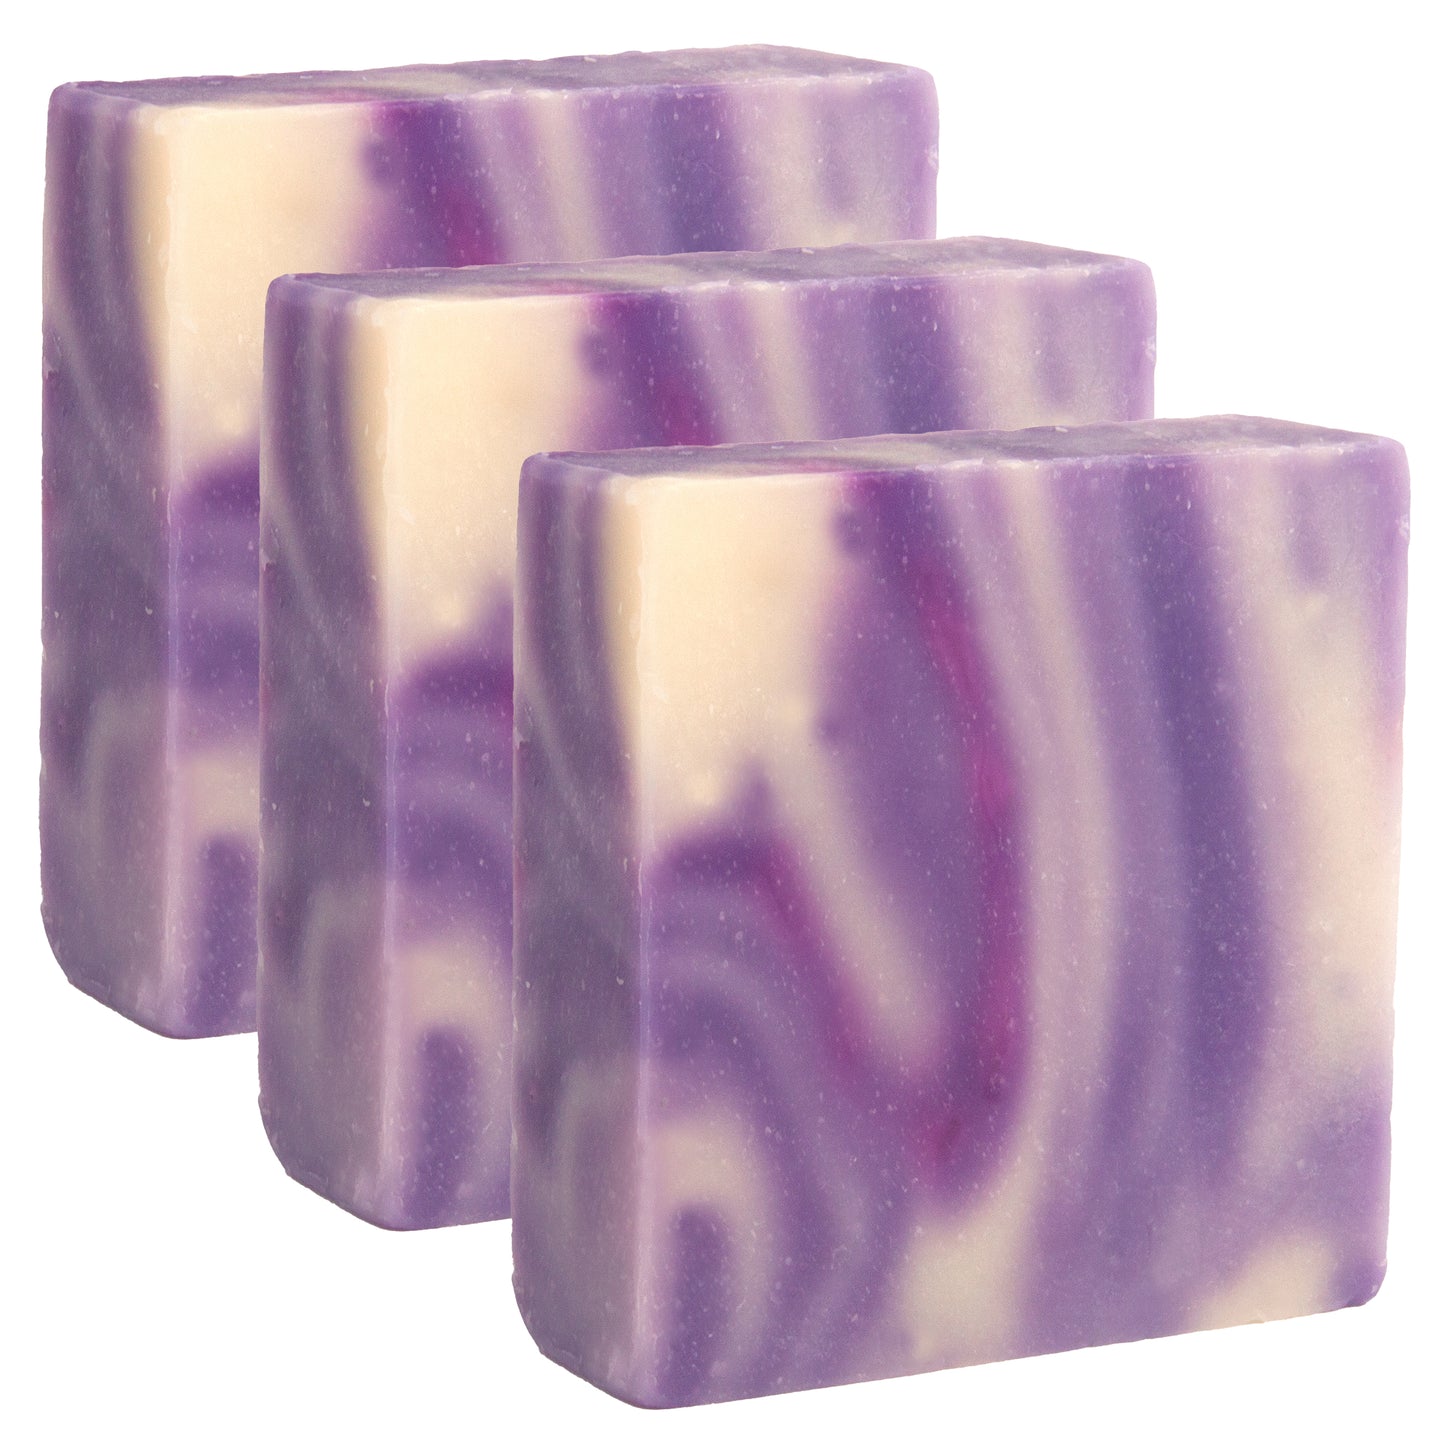 
                  
                    Majestic Lather Lavender Handmade Bar Soap Close Up 3 Bars
                  
                